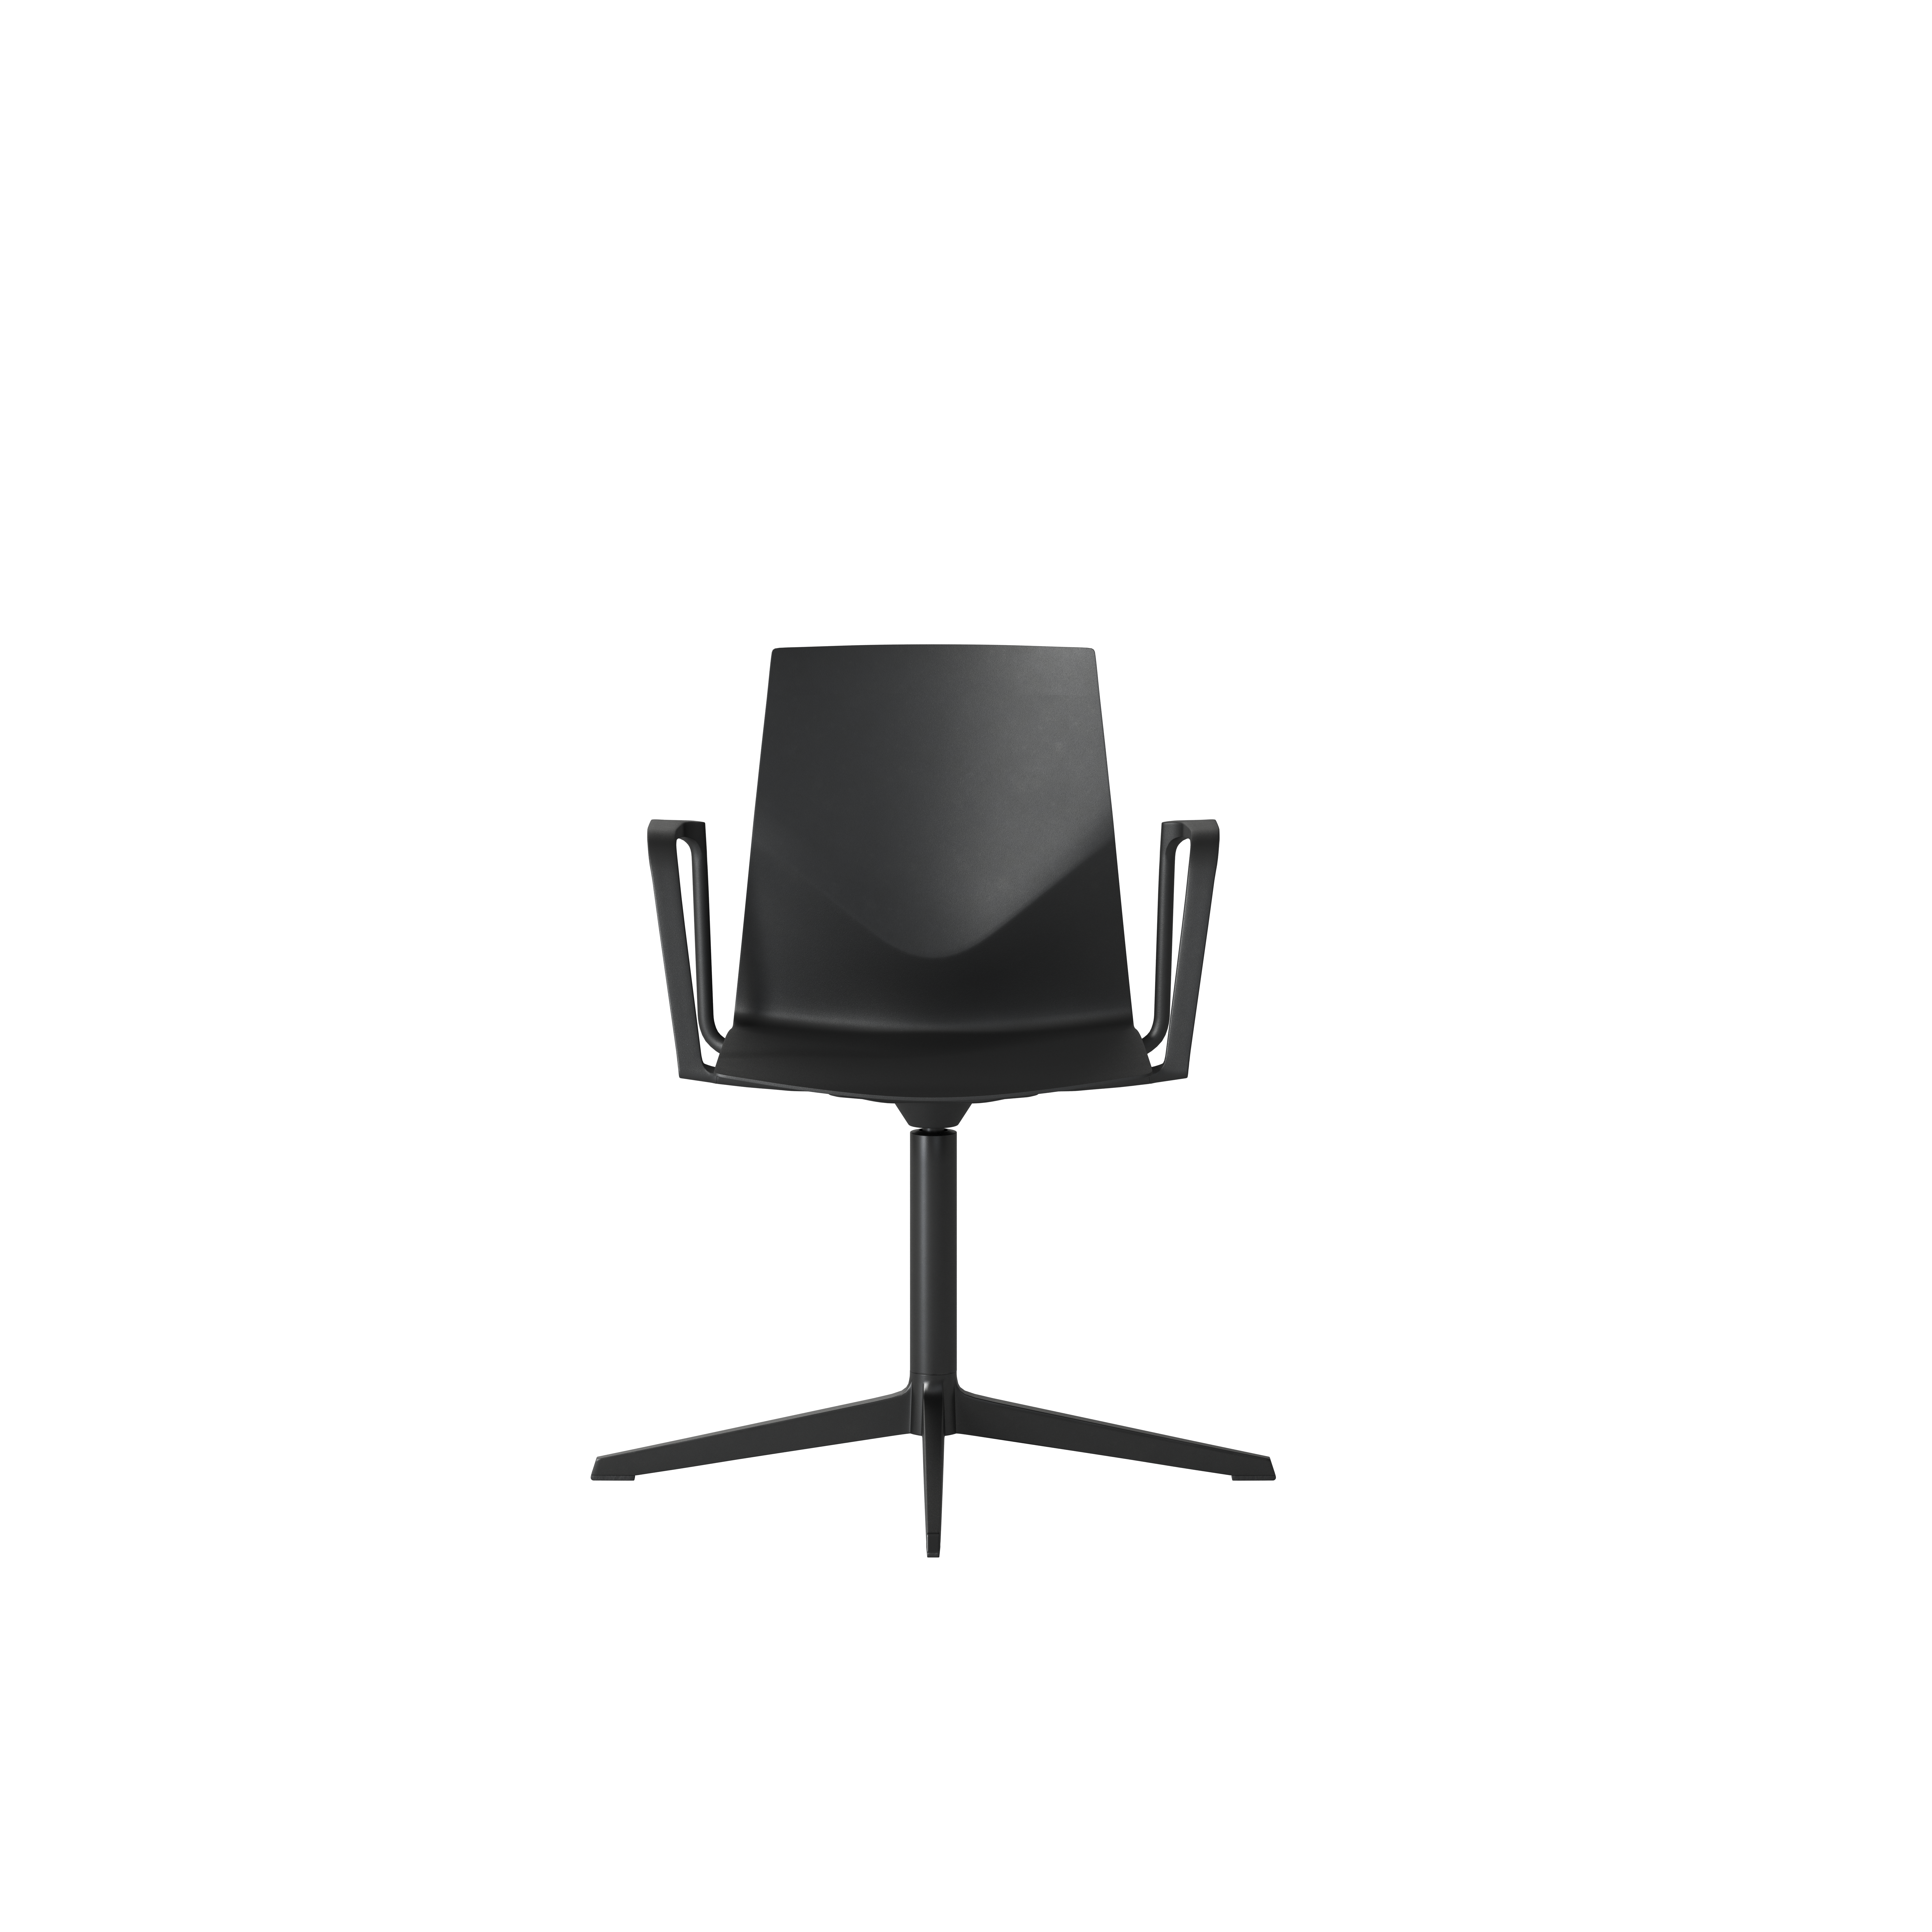 OCEE&FOUR – Chairs – FourCast 2 Evo – Plastic shell - Loop Armrest - Swivel - Packshot Image 2